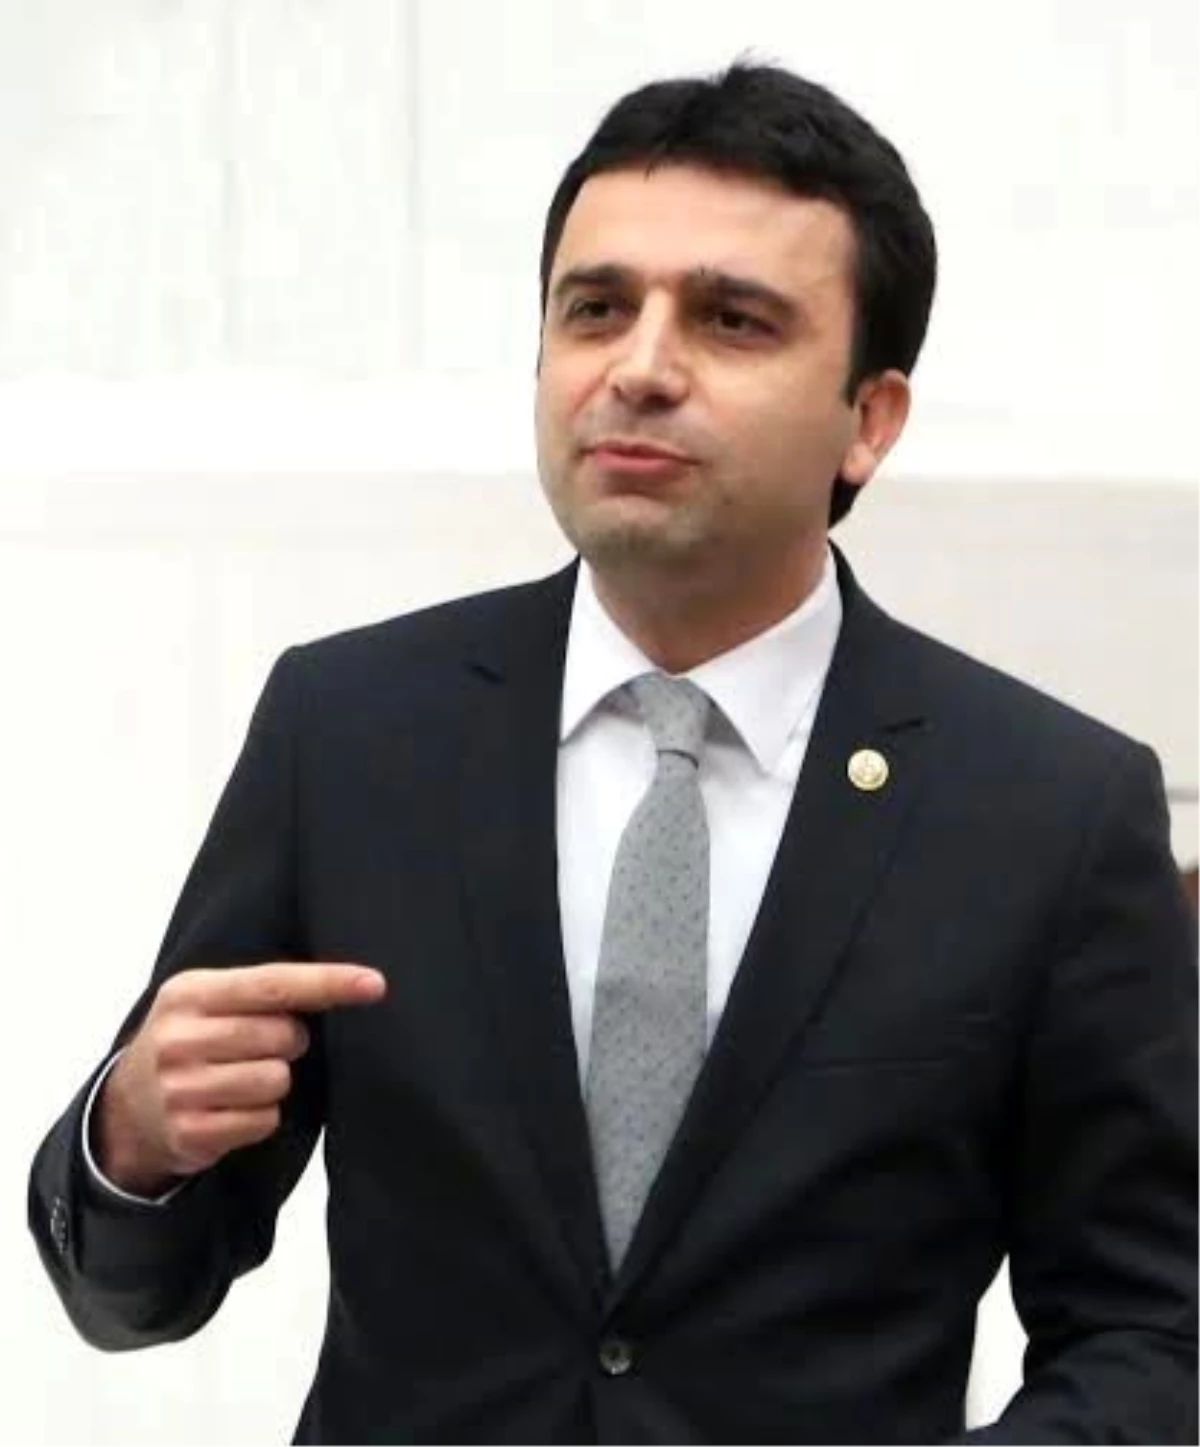 AK Parti Antalya Milletvekili Mustafa Köse: "Darbe Ürünü Anayasadan Kurtulmalıyız"